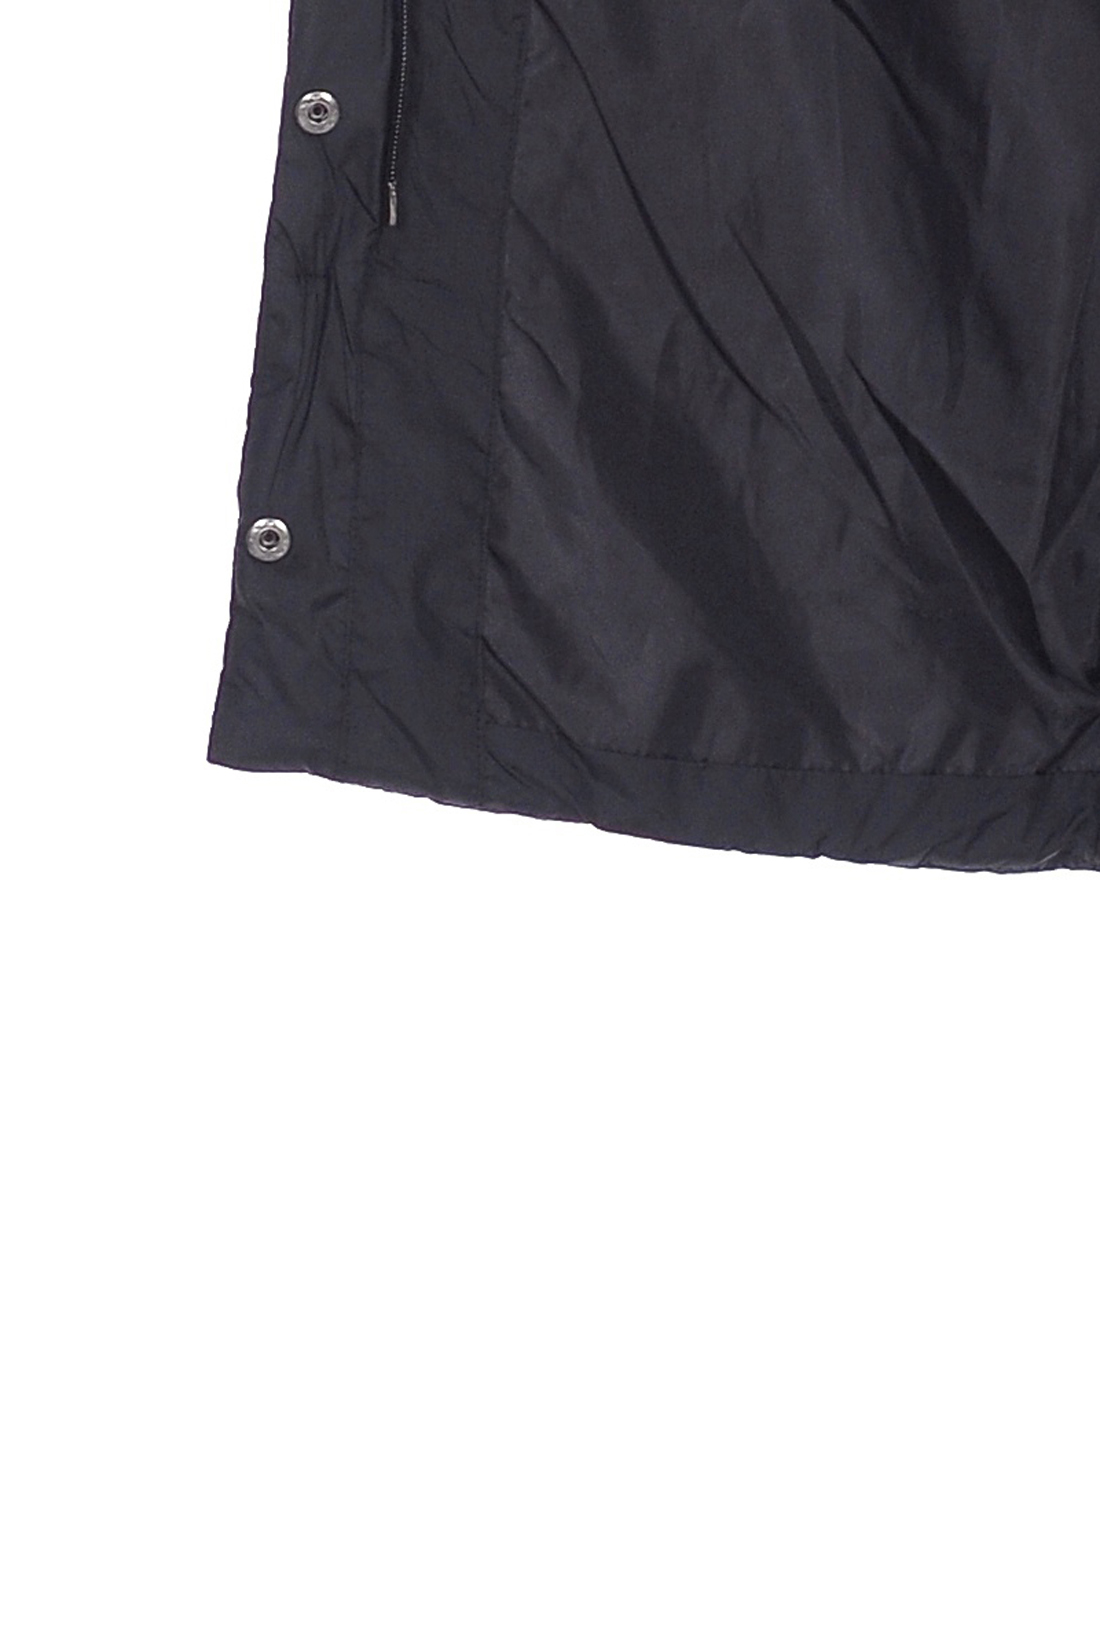 Удлинённая прямая куртка (арт. baon B039033), размер 3XL, цвет черный Удлинённая прямая куртка (арт. baon B039033) - фото 4